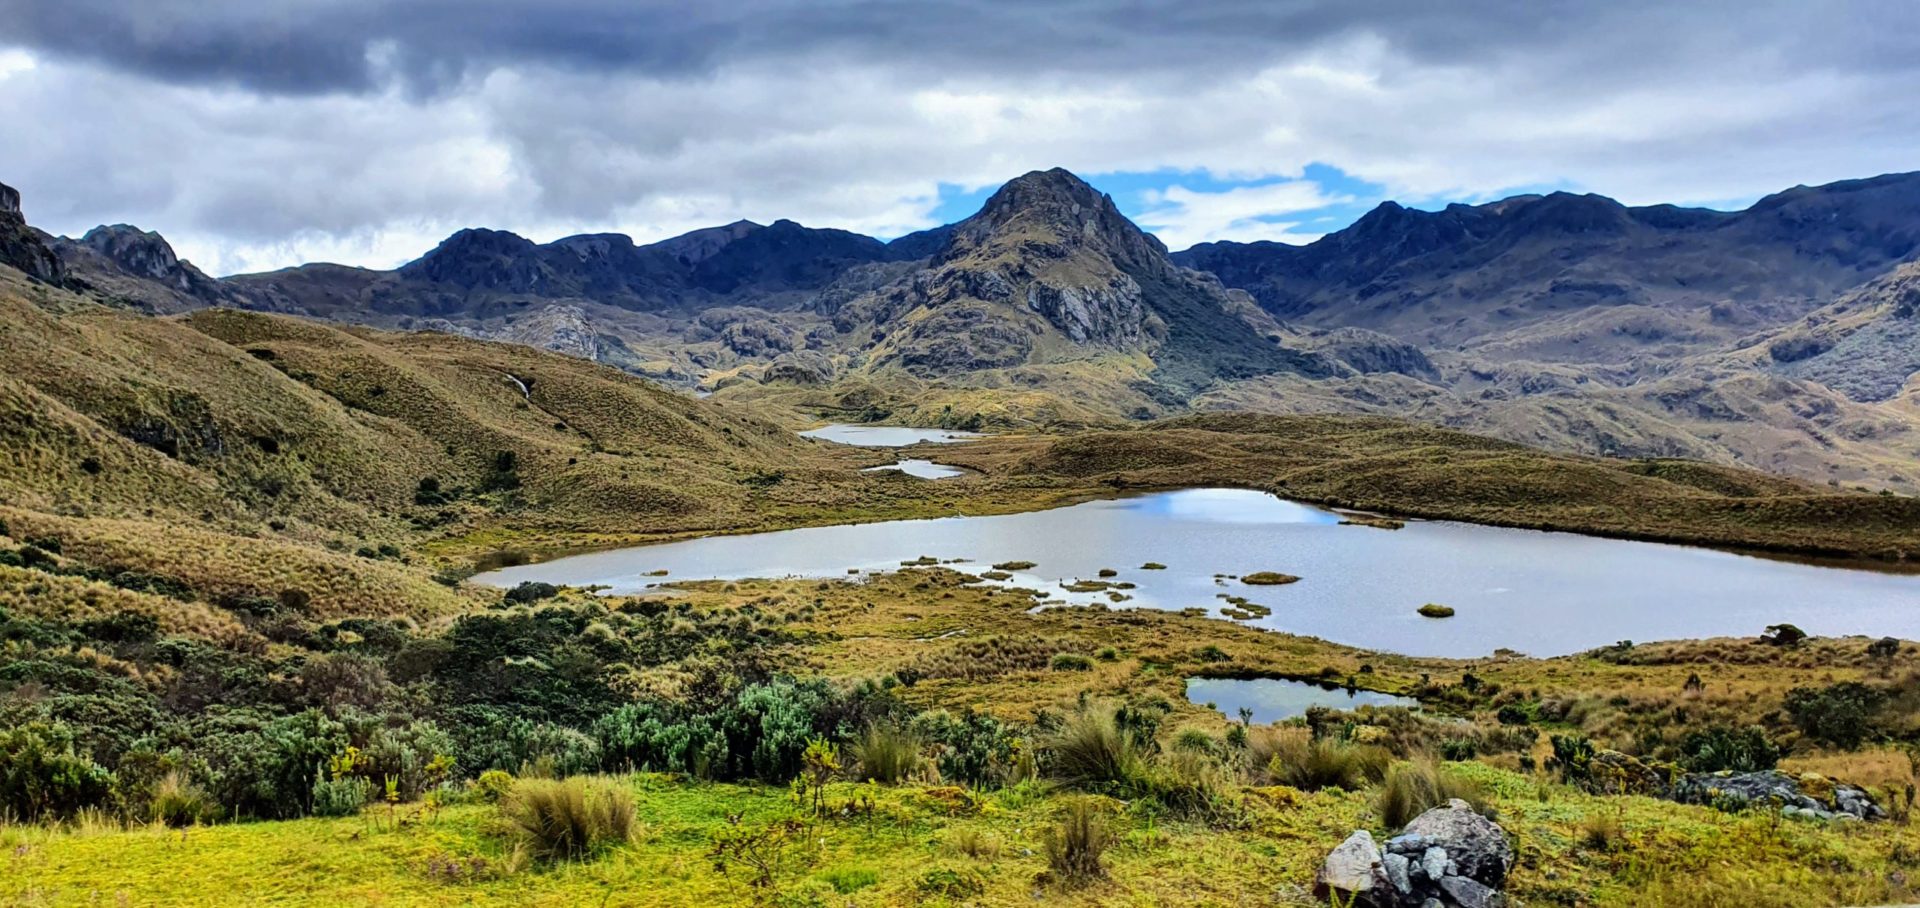 Besuch des Cajas-Nationalparks Gruppenreise nach Ecuador